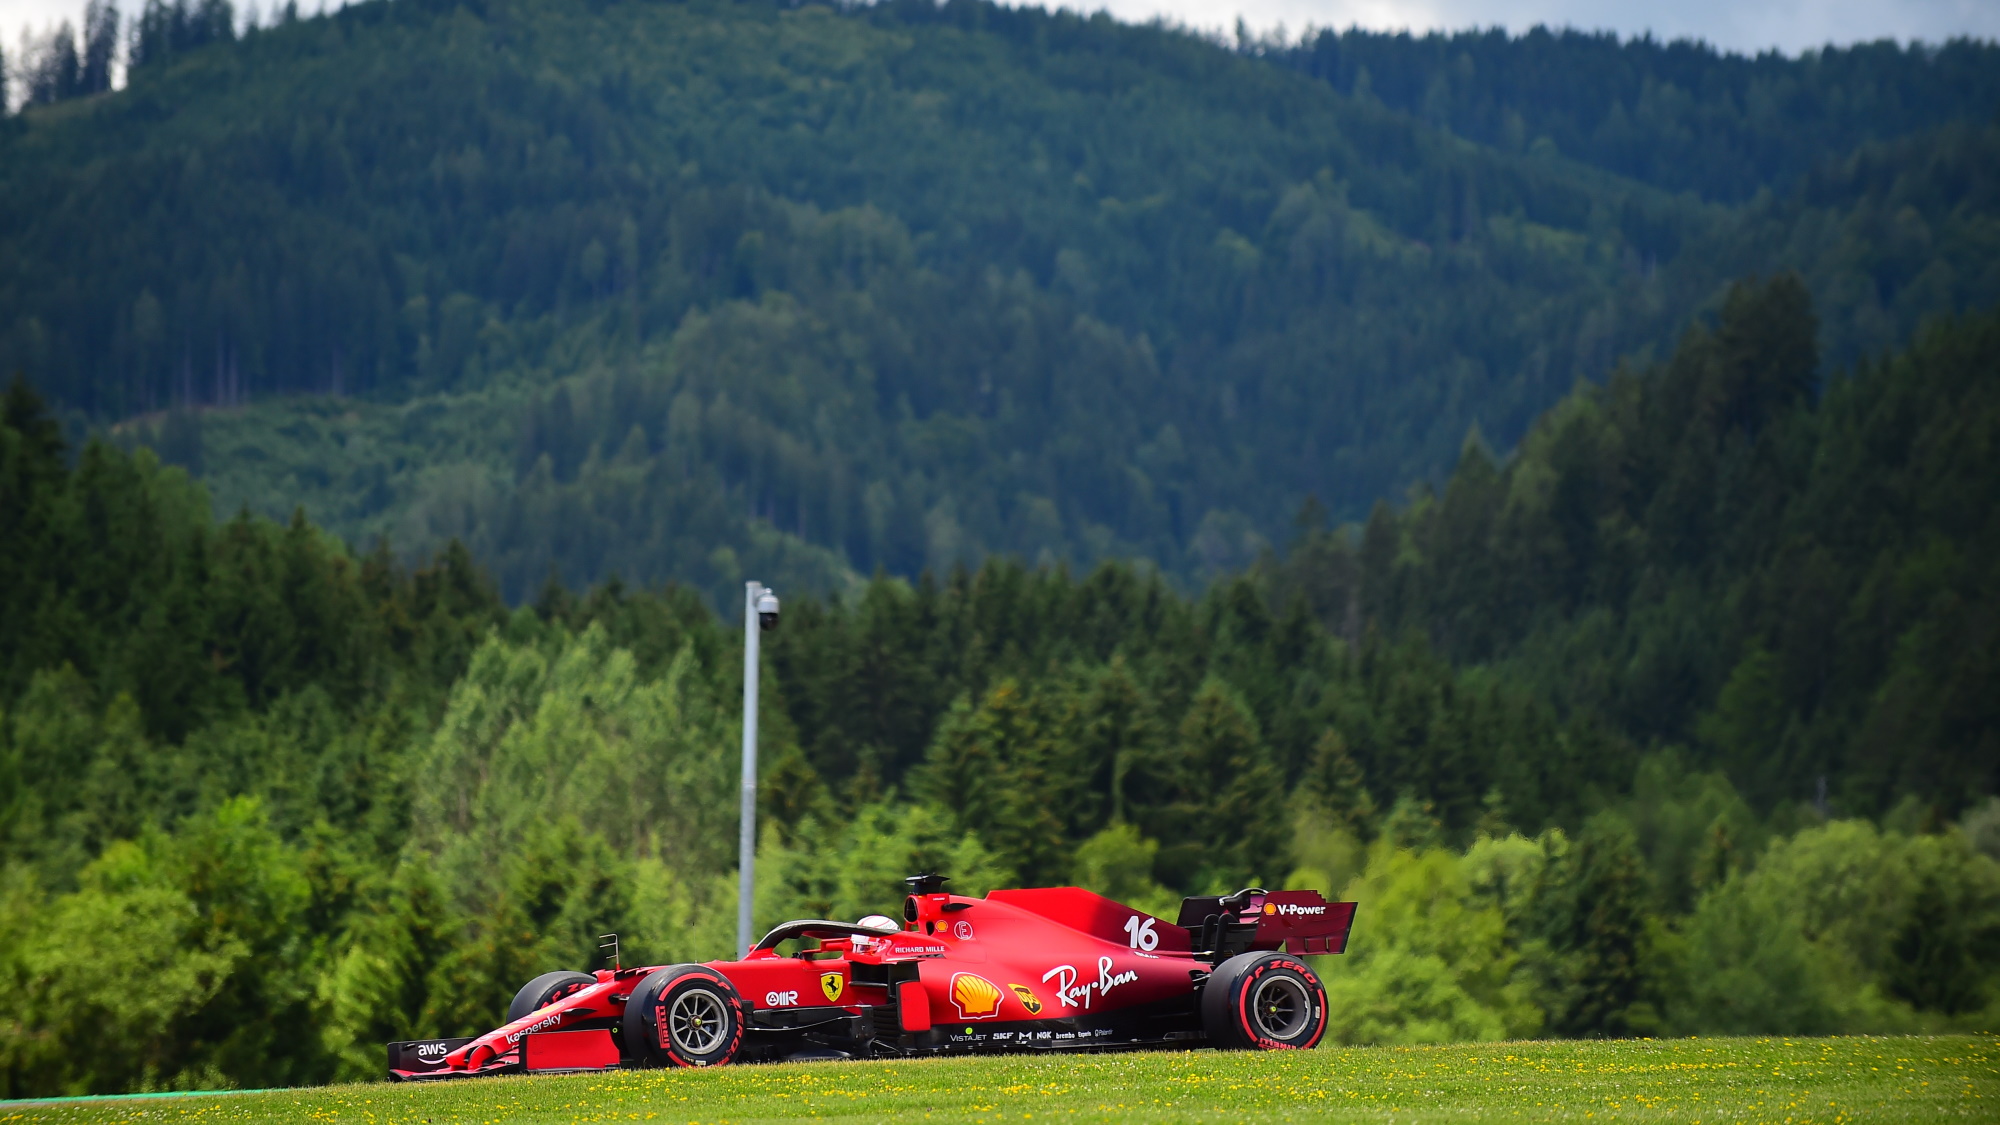 Live Fia Formula 1 2020 Austrian F1 Gp Qualifying Streaming Online Link 2